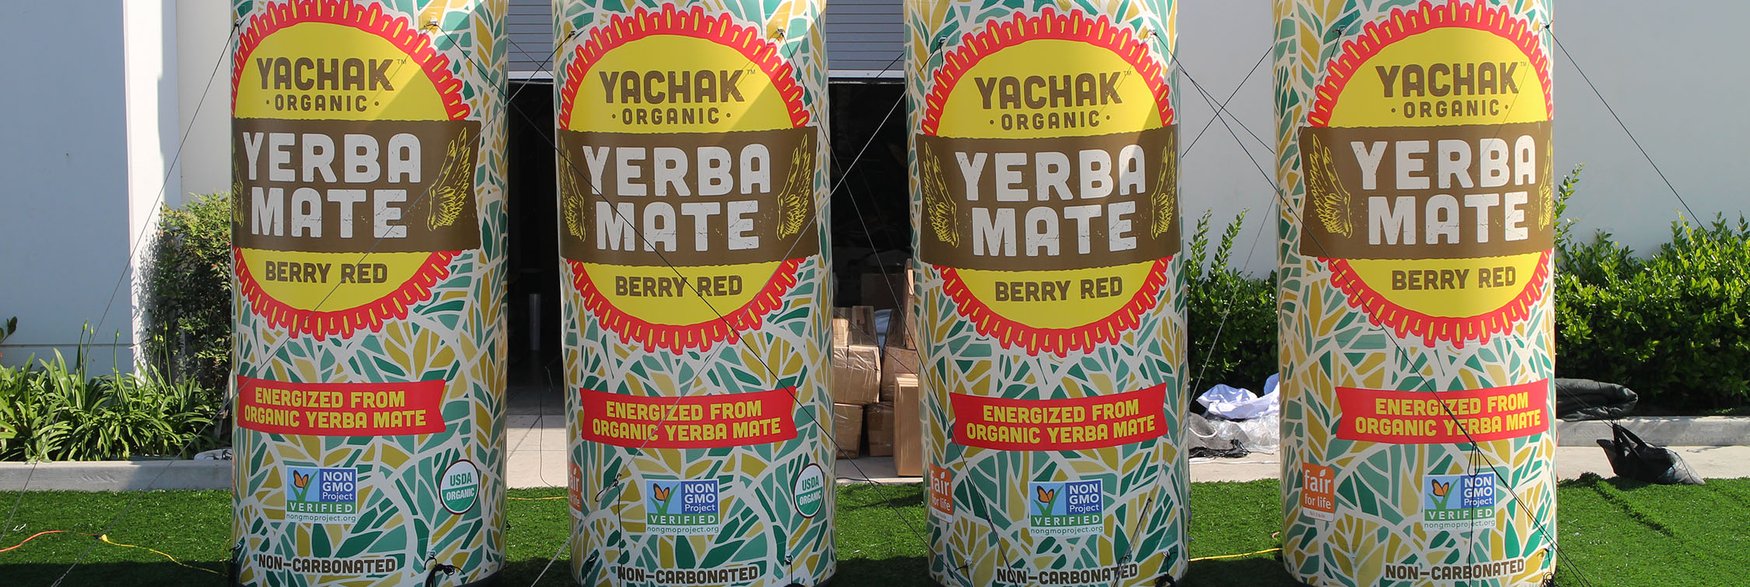 yachak-yerba-mate-inflatable-cans